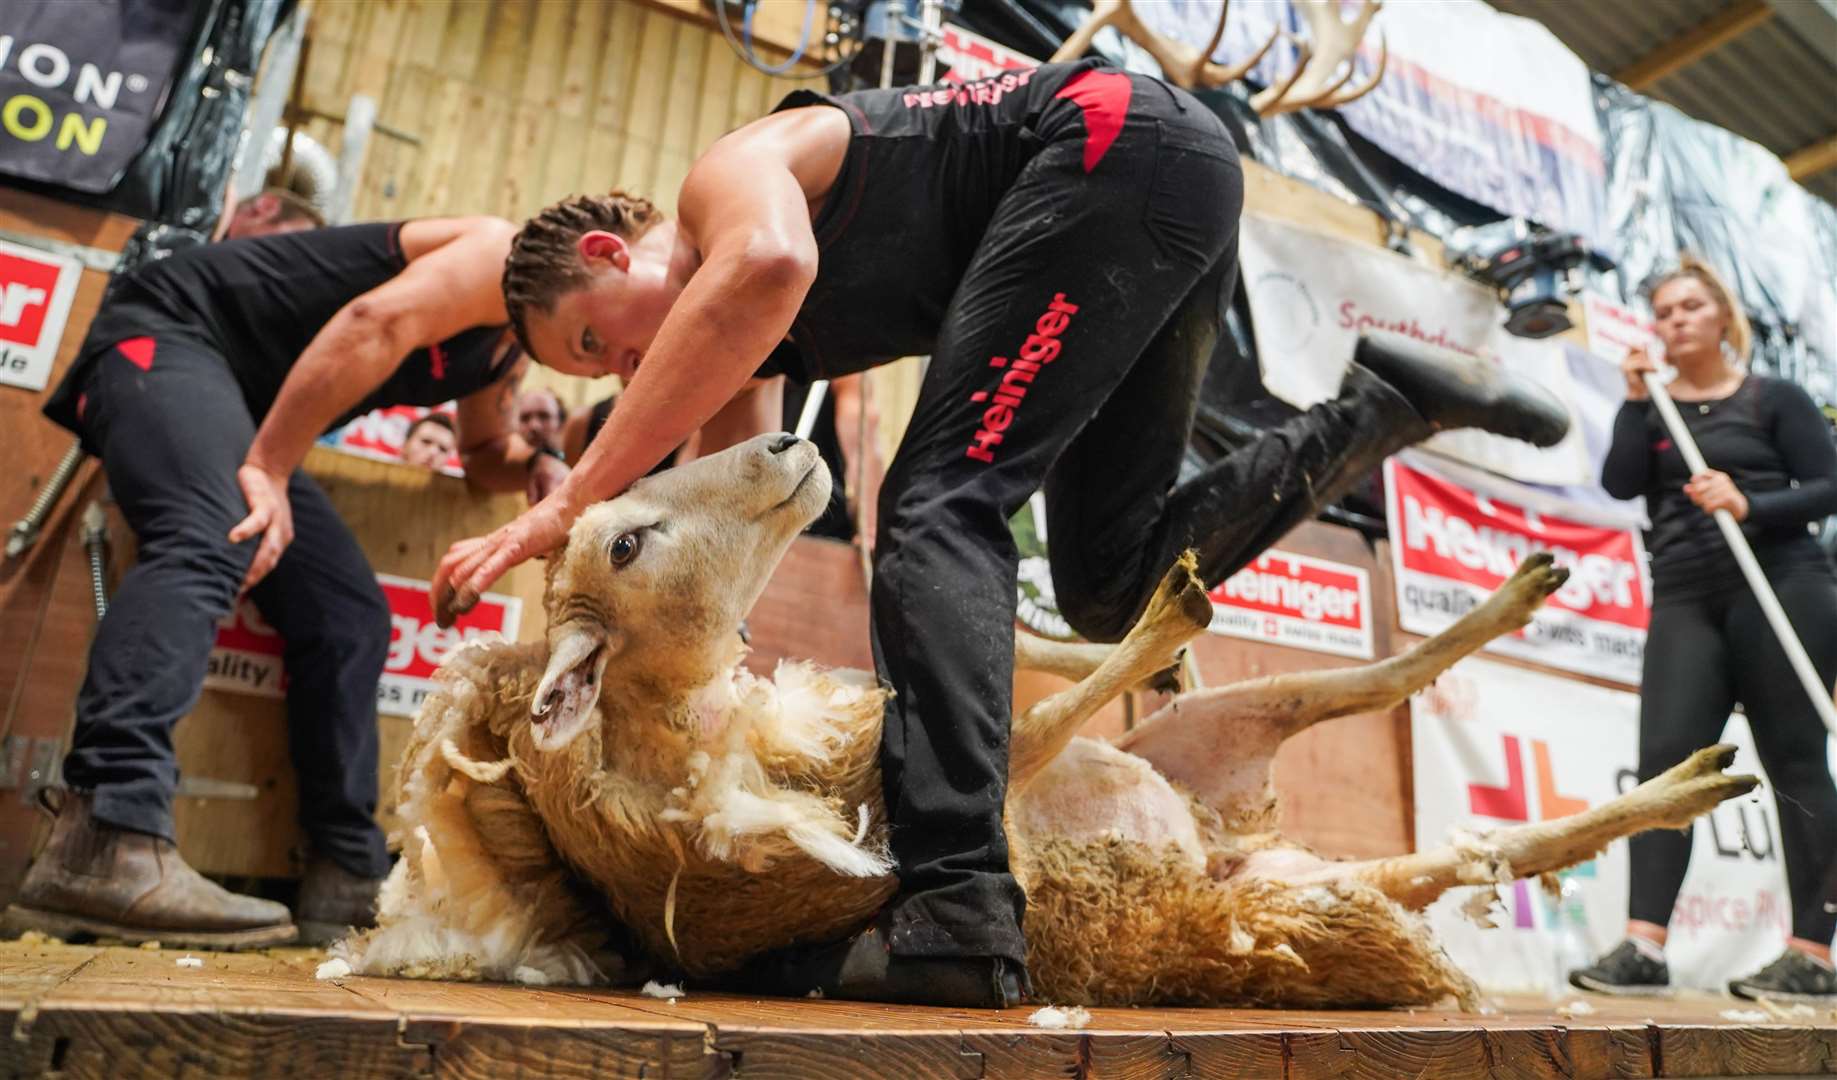 Marie sheared 370 sheep in eight hours